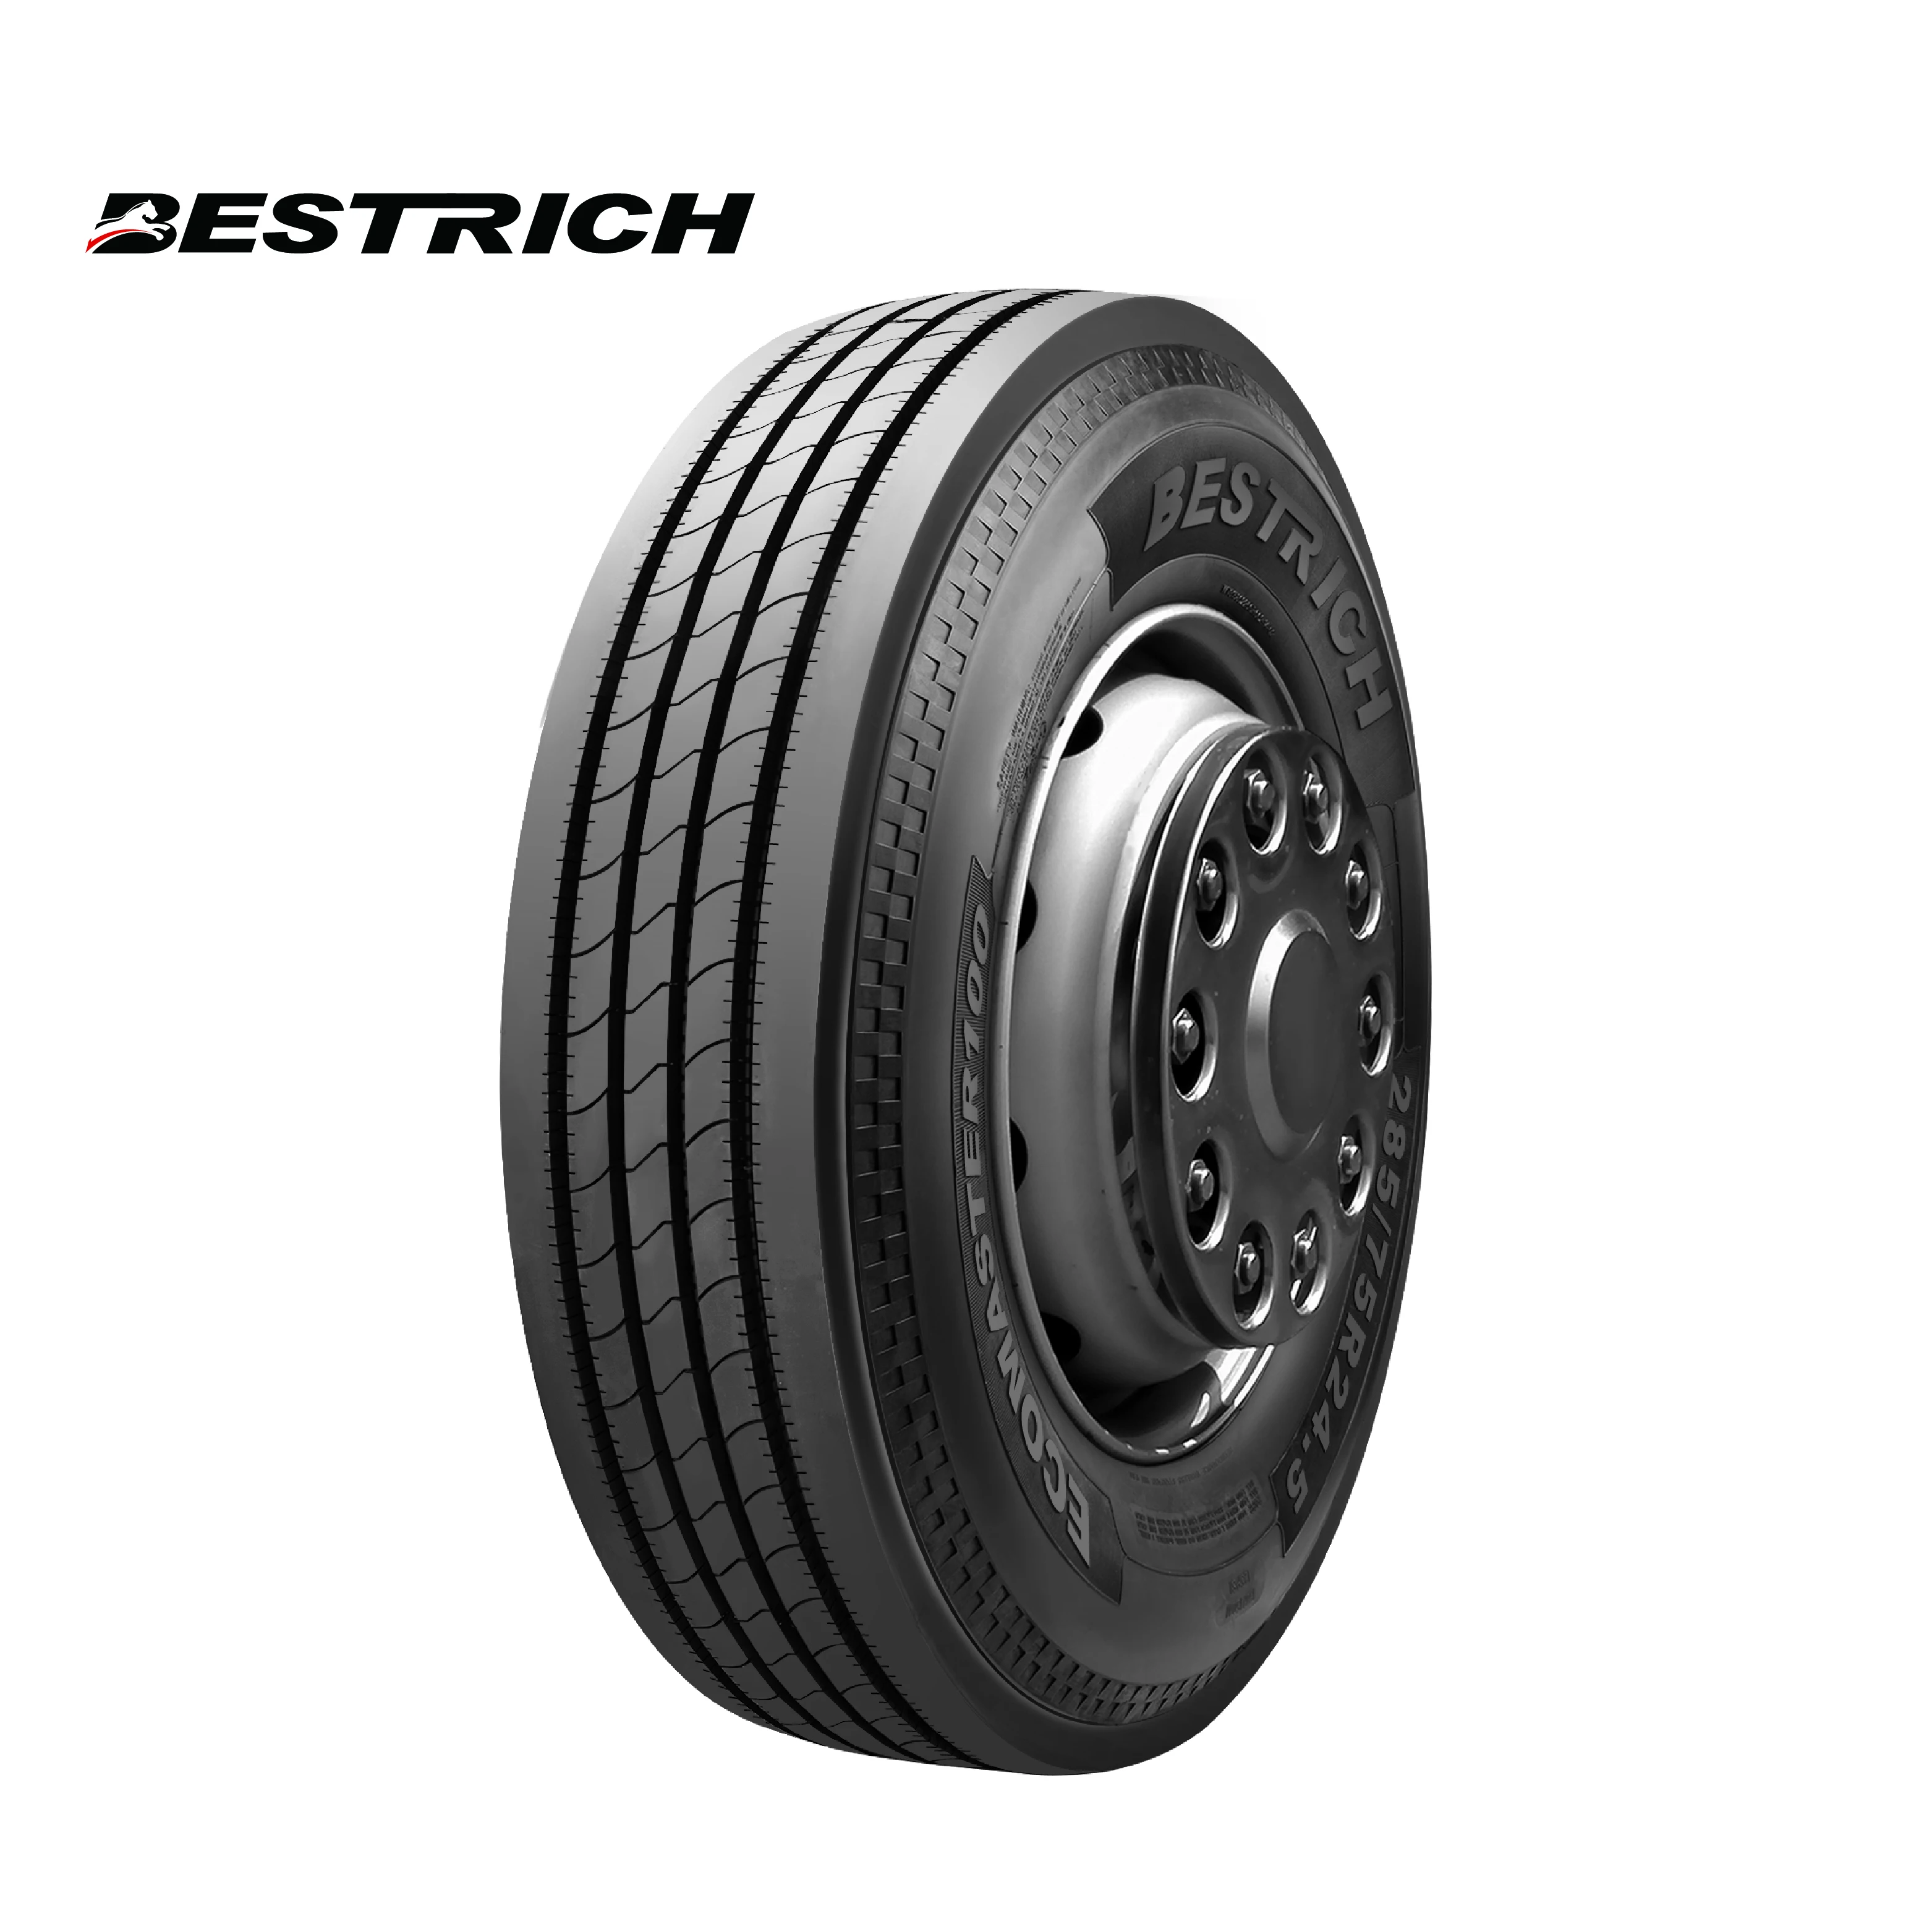 Chinese 225 75r15 Bestrich Brand New Suv Tyre 225 75 15 Buy Bestrich Brand 225 75 15 New Suv Tyre Product On Alibaba Com